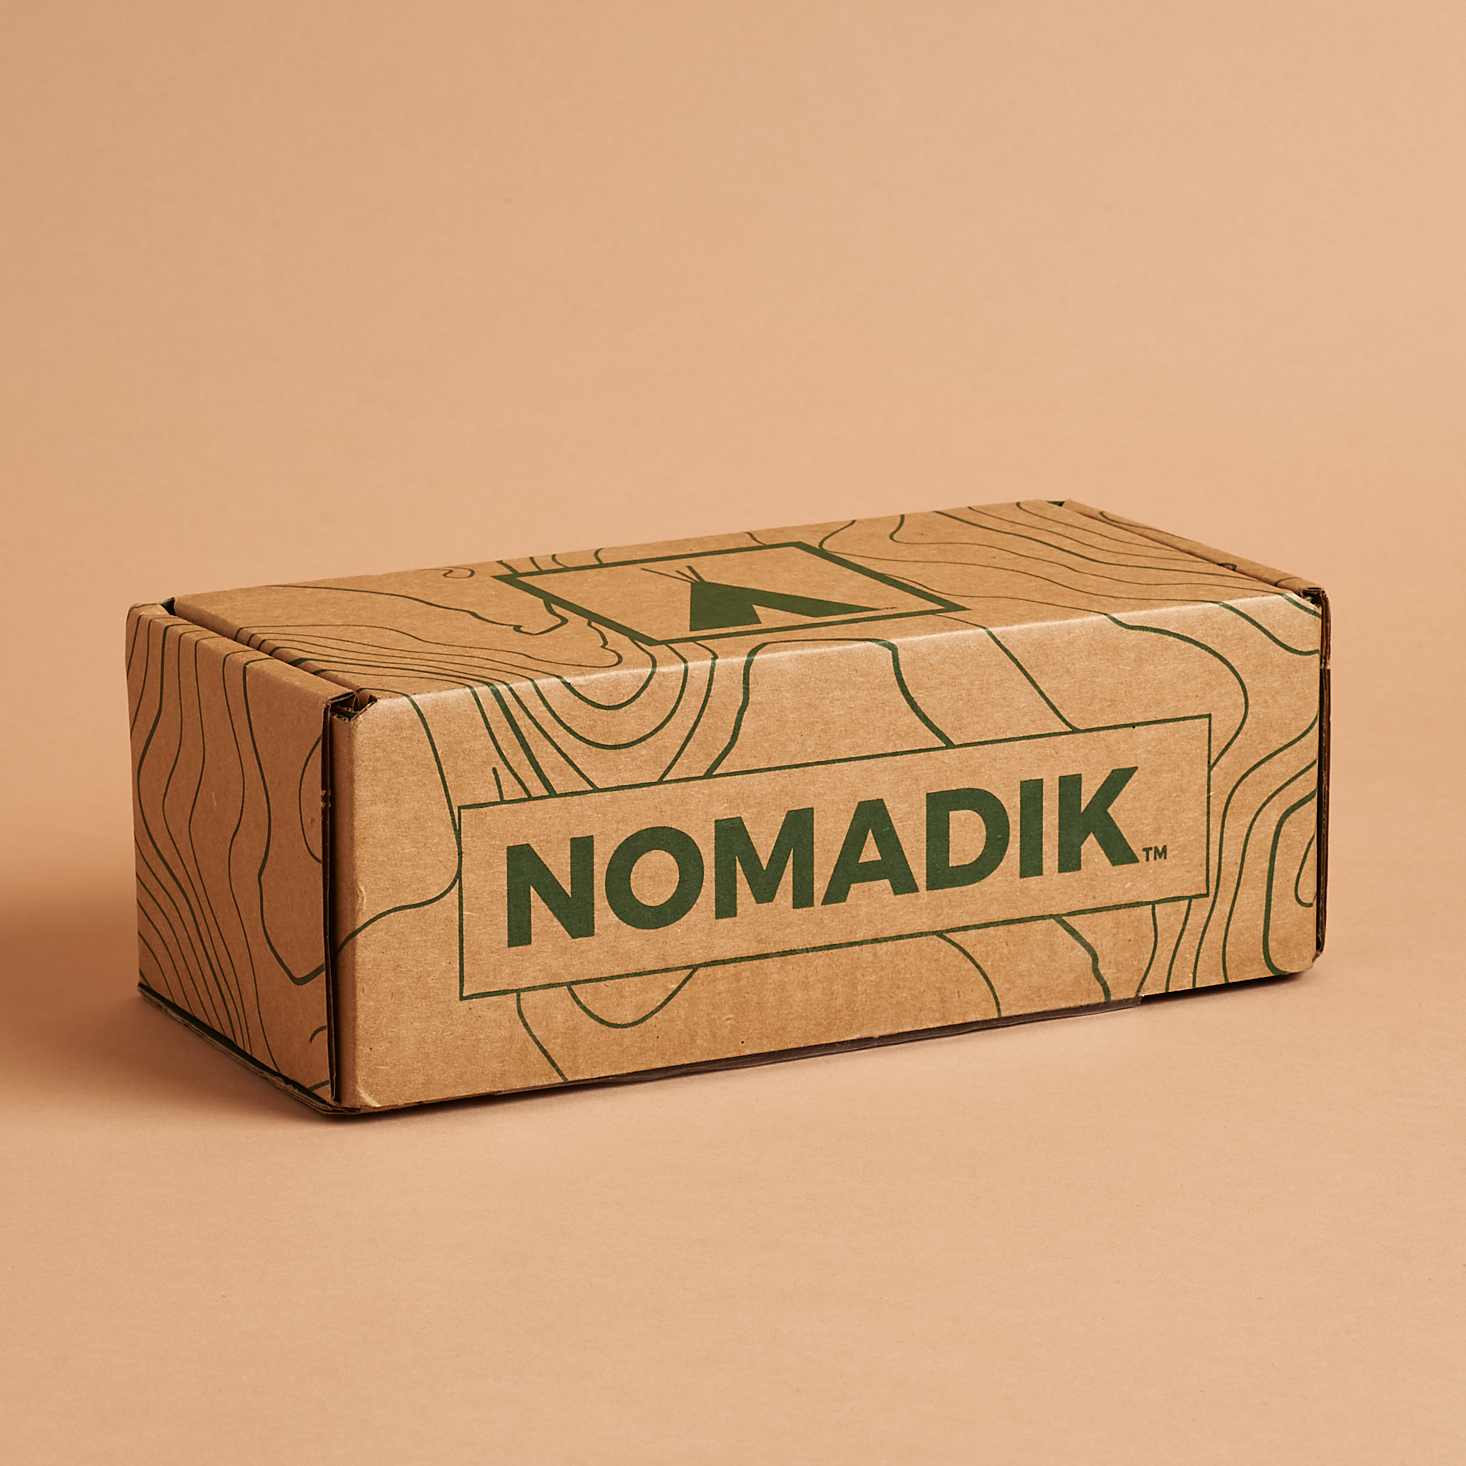 Nomadik “Winter Travels” Review + Coupon – October 2020